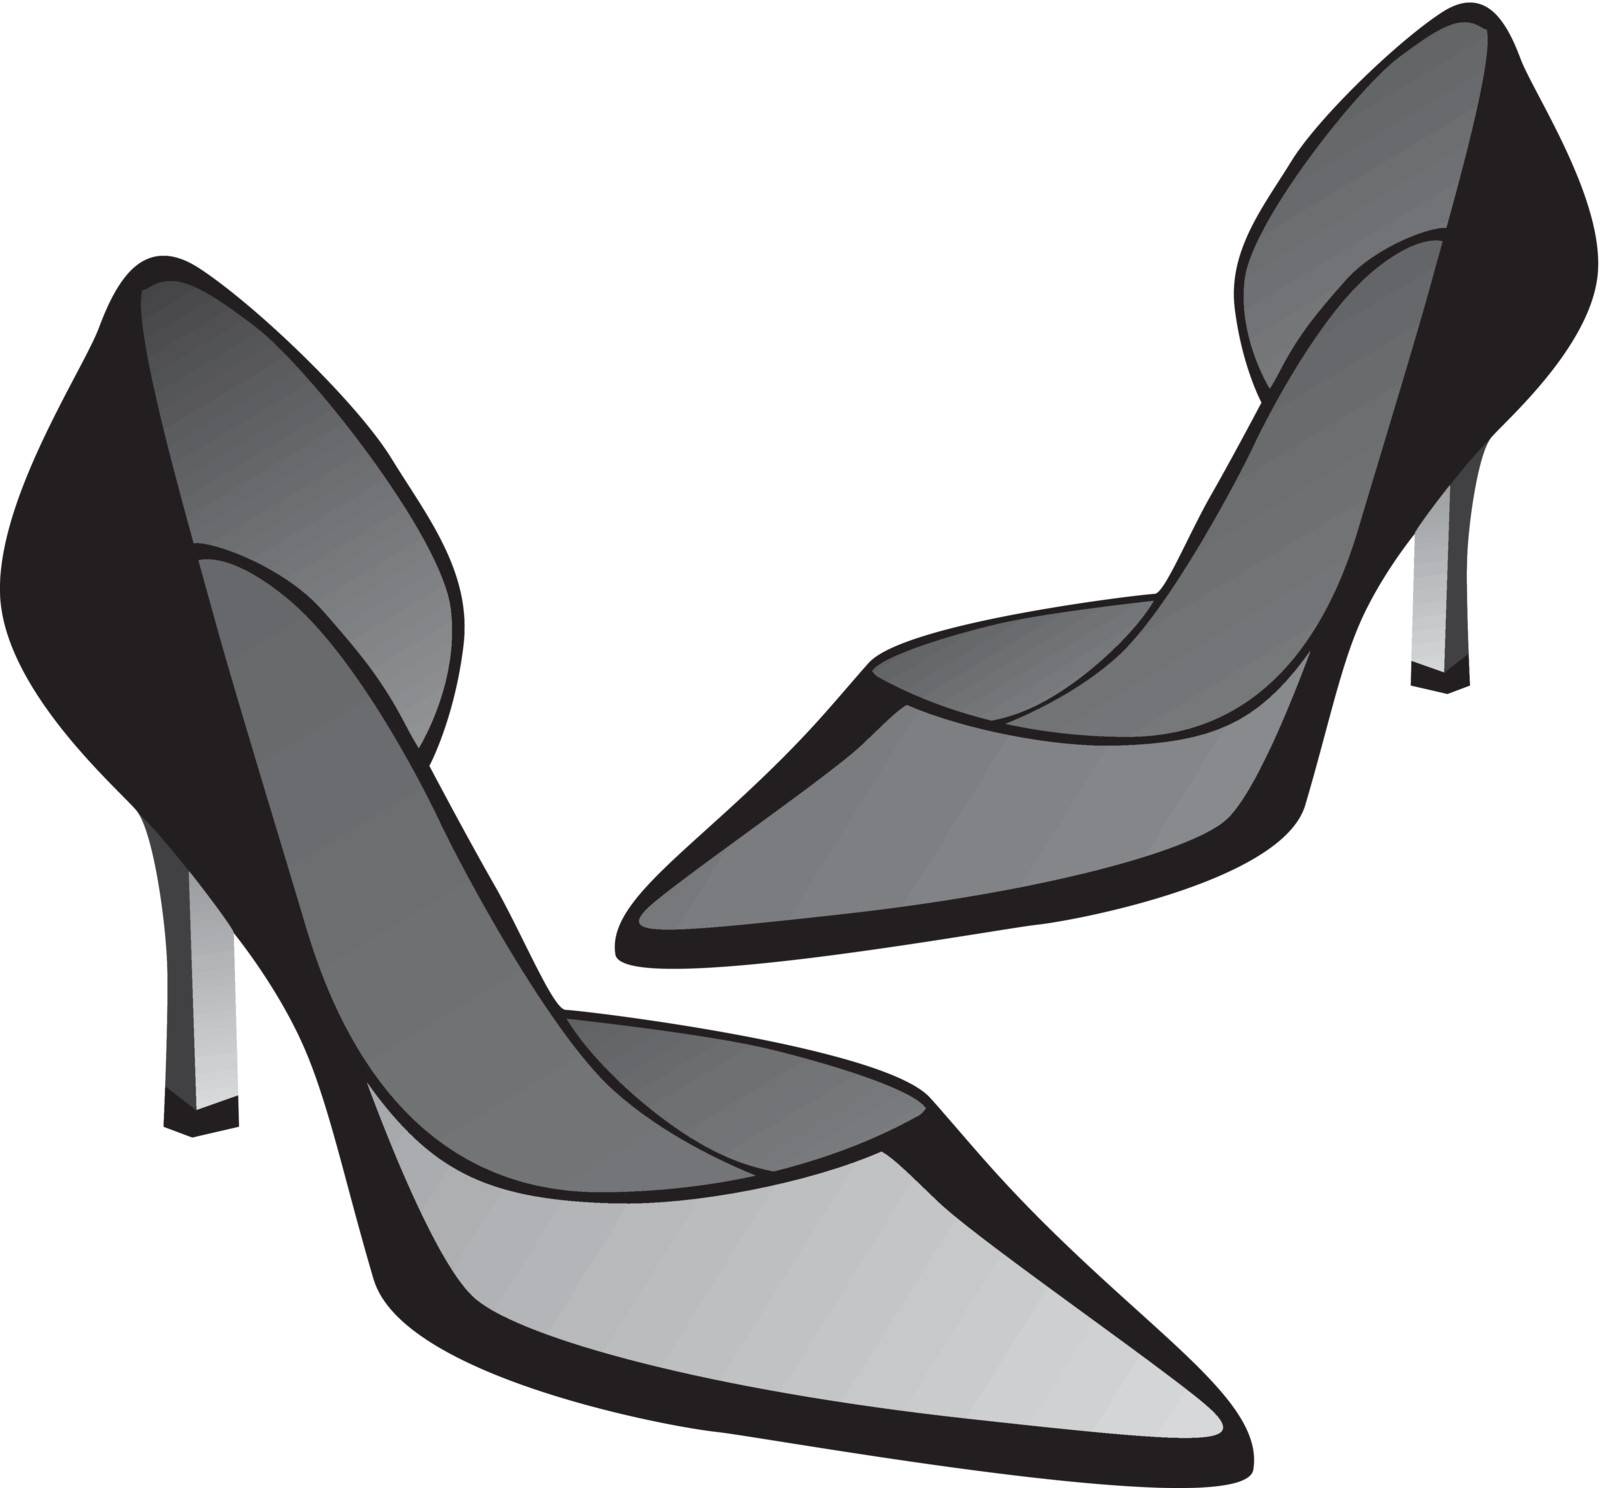 high heel pair of shoes by pilgrimartworks